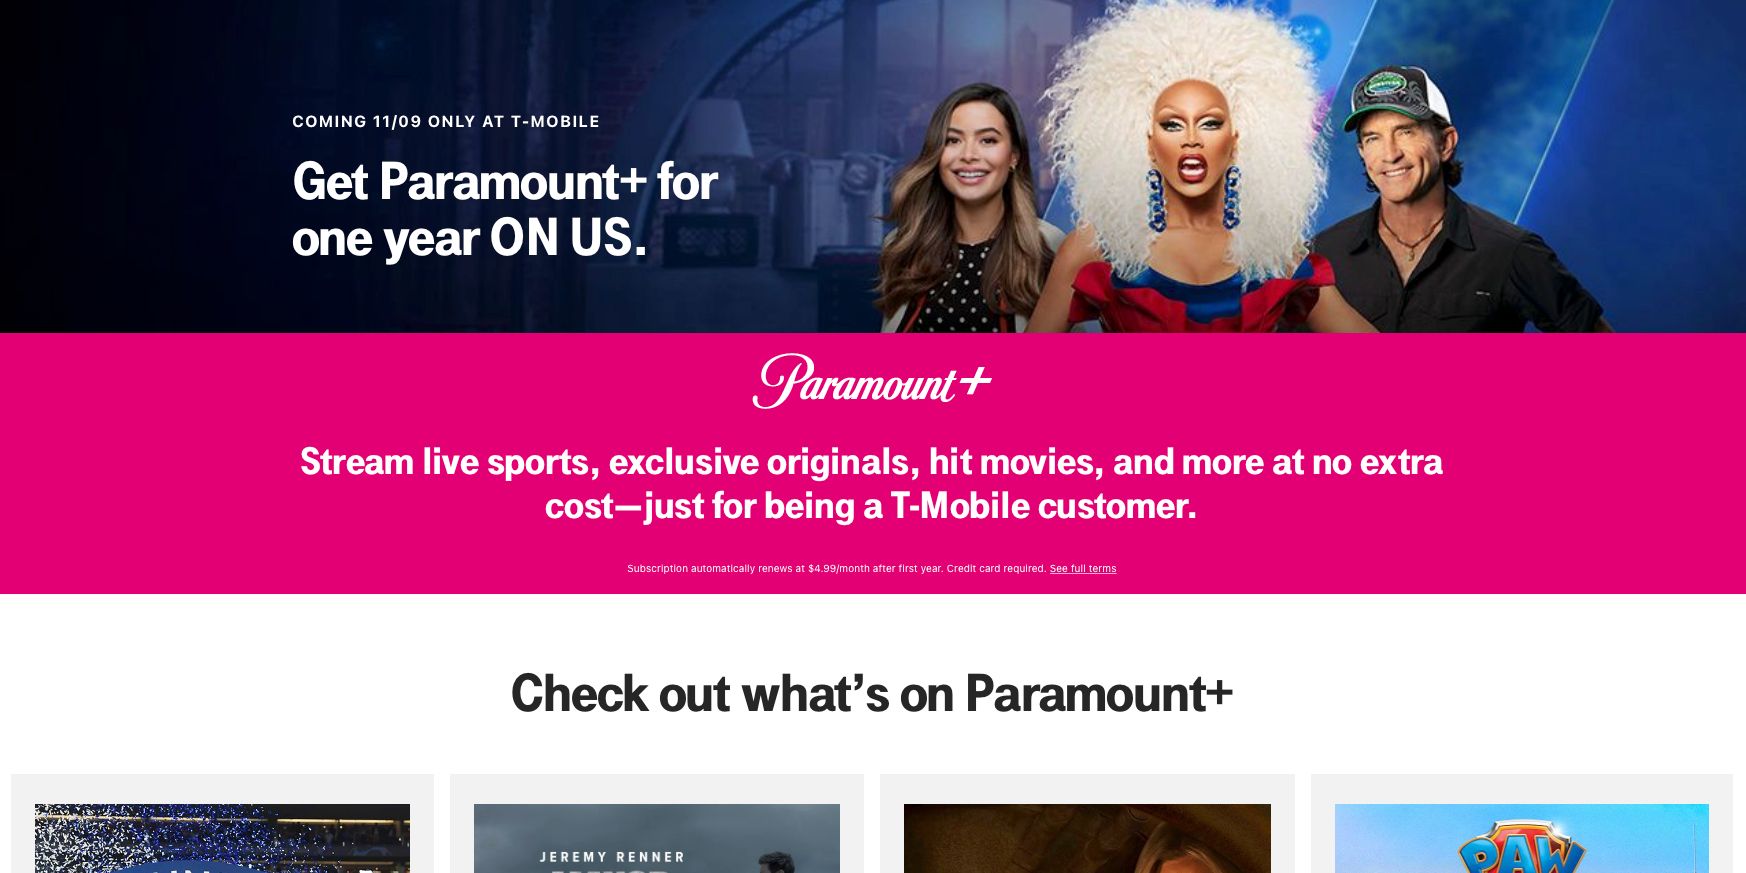 T-Mobile's Paramount+ promo website